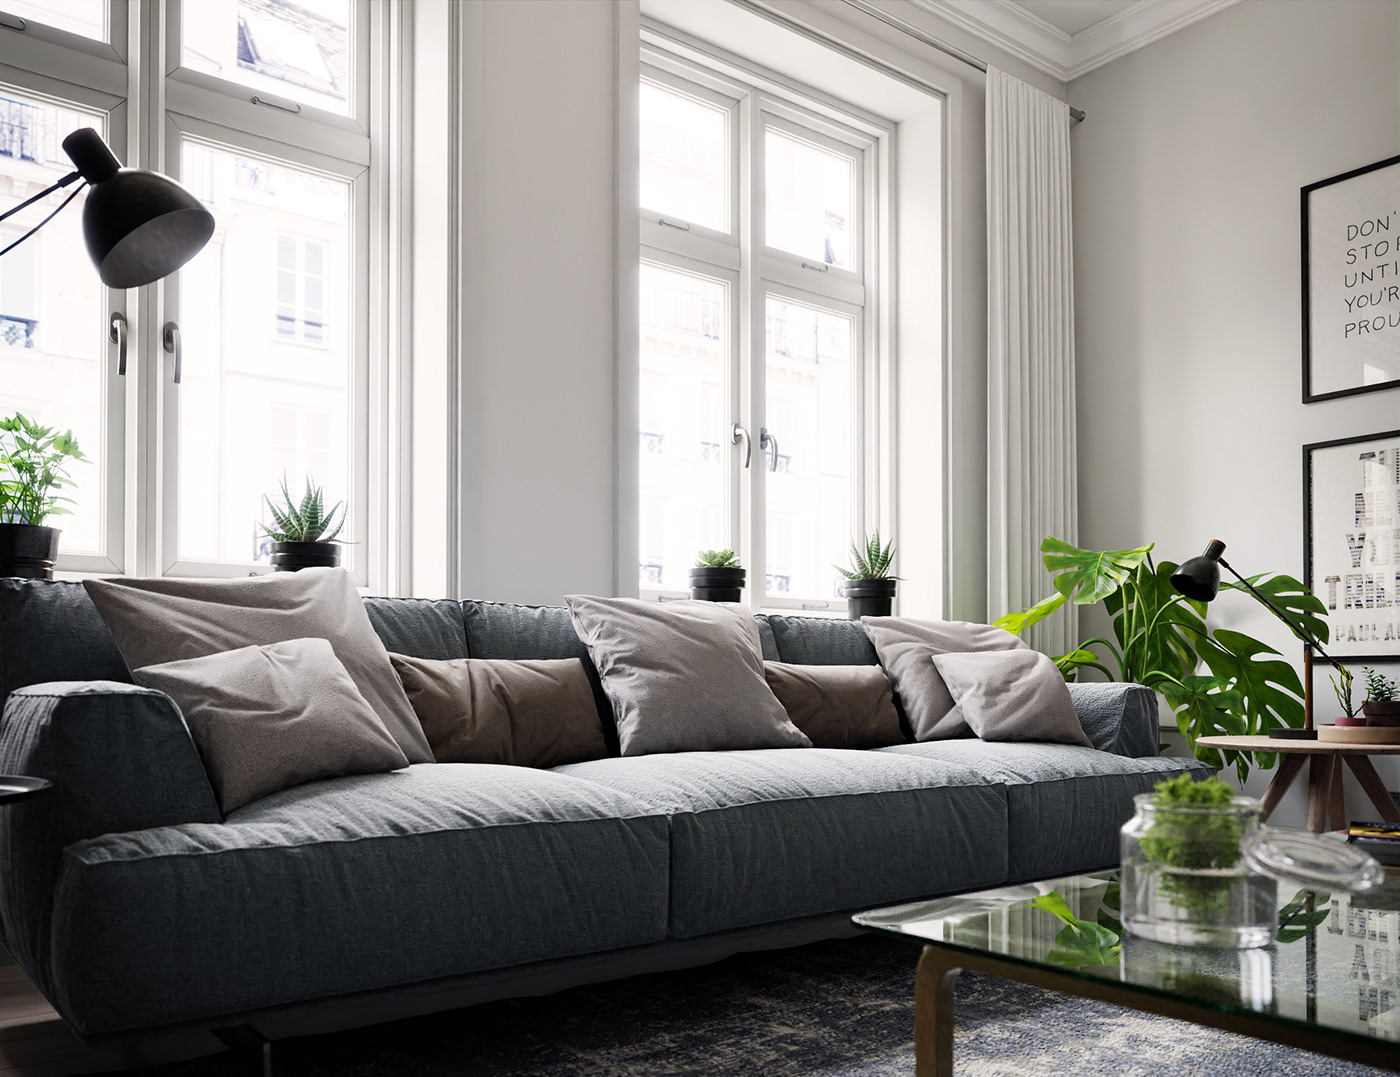 #interiordesign 3drendering architecturevisualization archviz Interior_rendering livingroomdesign scandinavianstyle